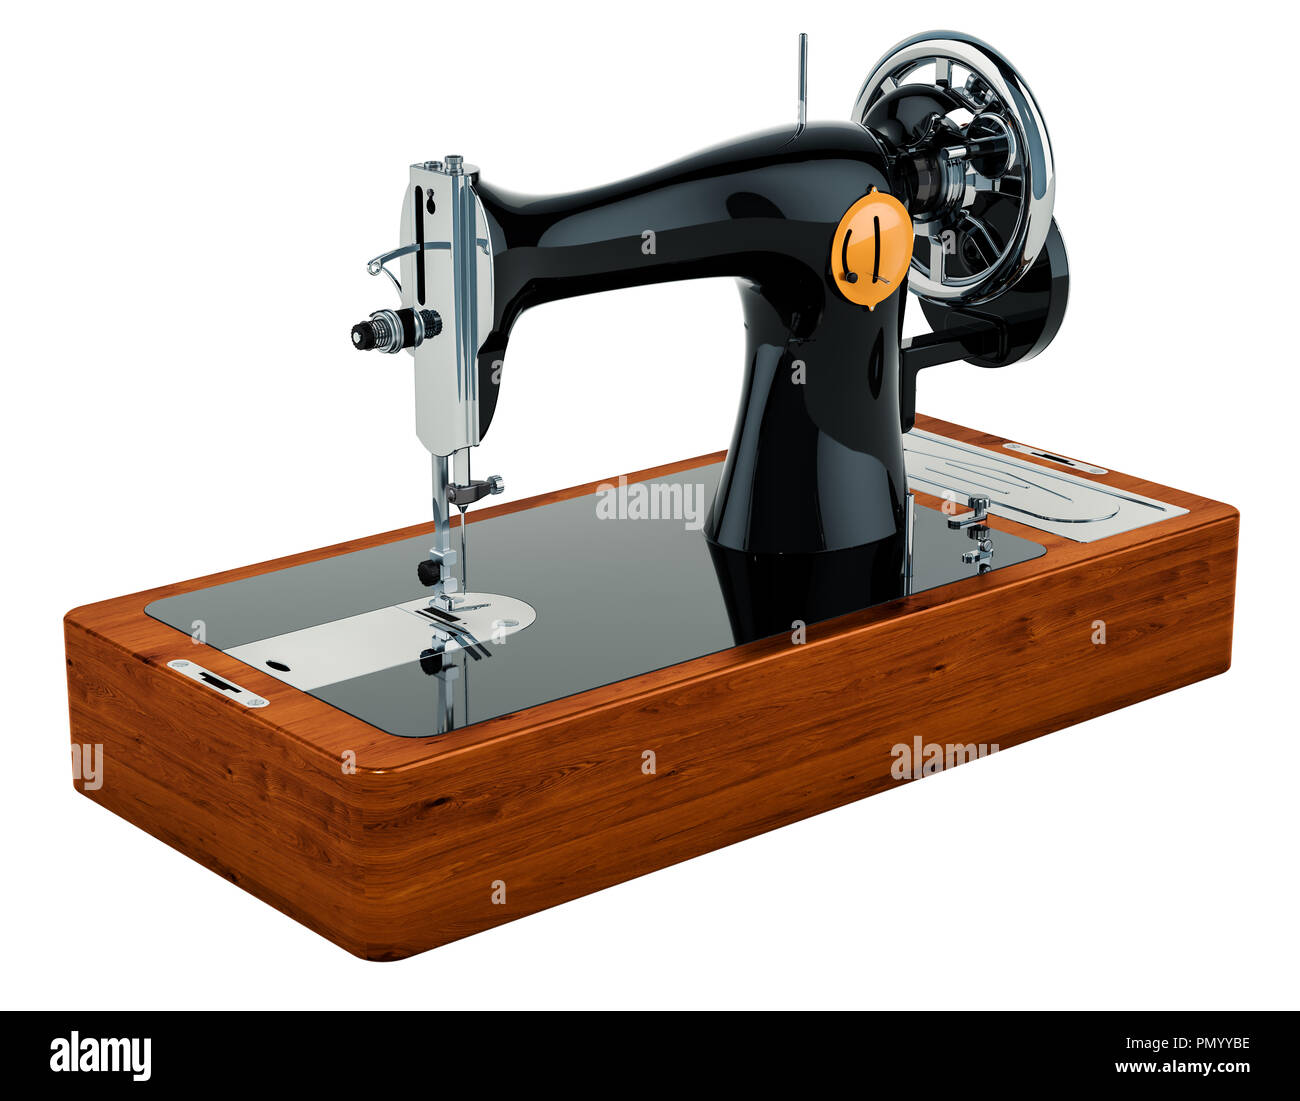 Maquina de coser manual fotografías e imágenes de alta resolución